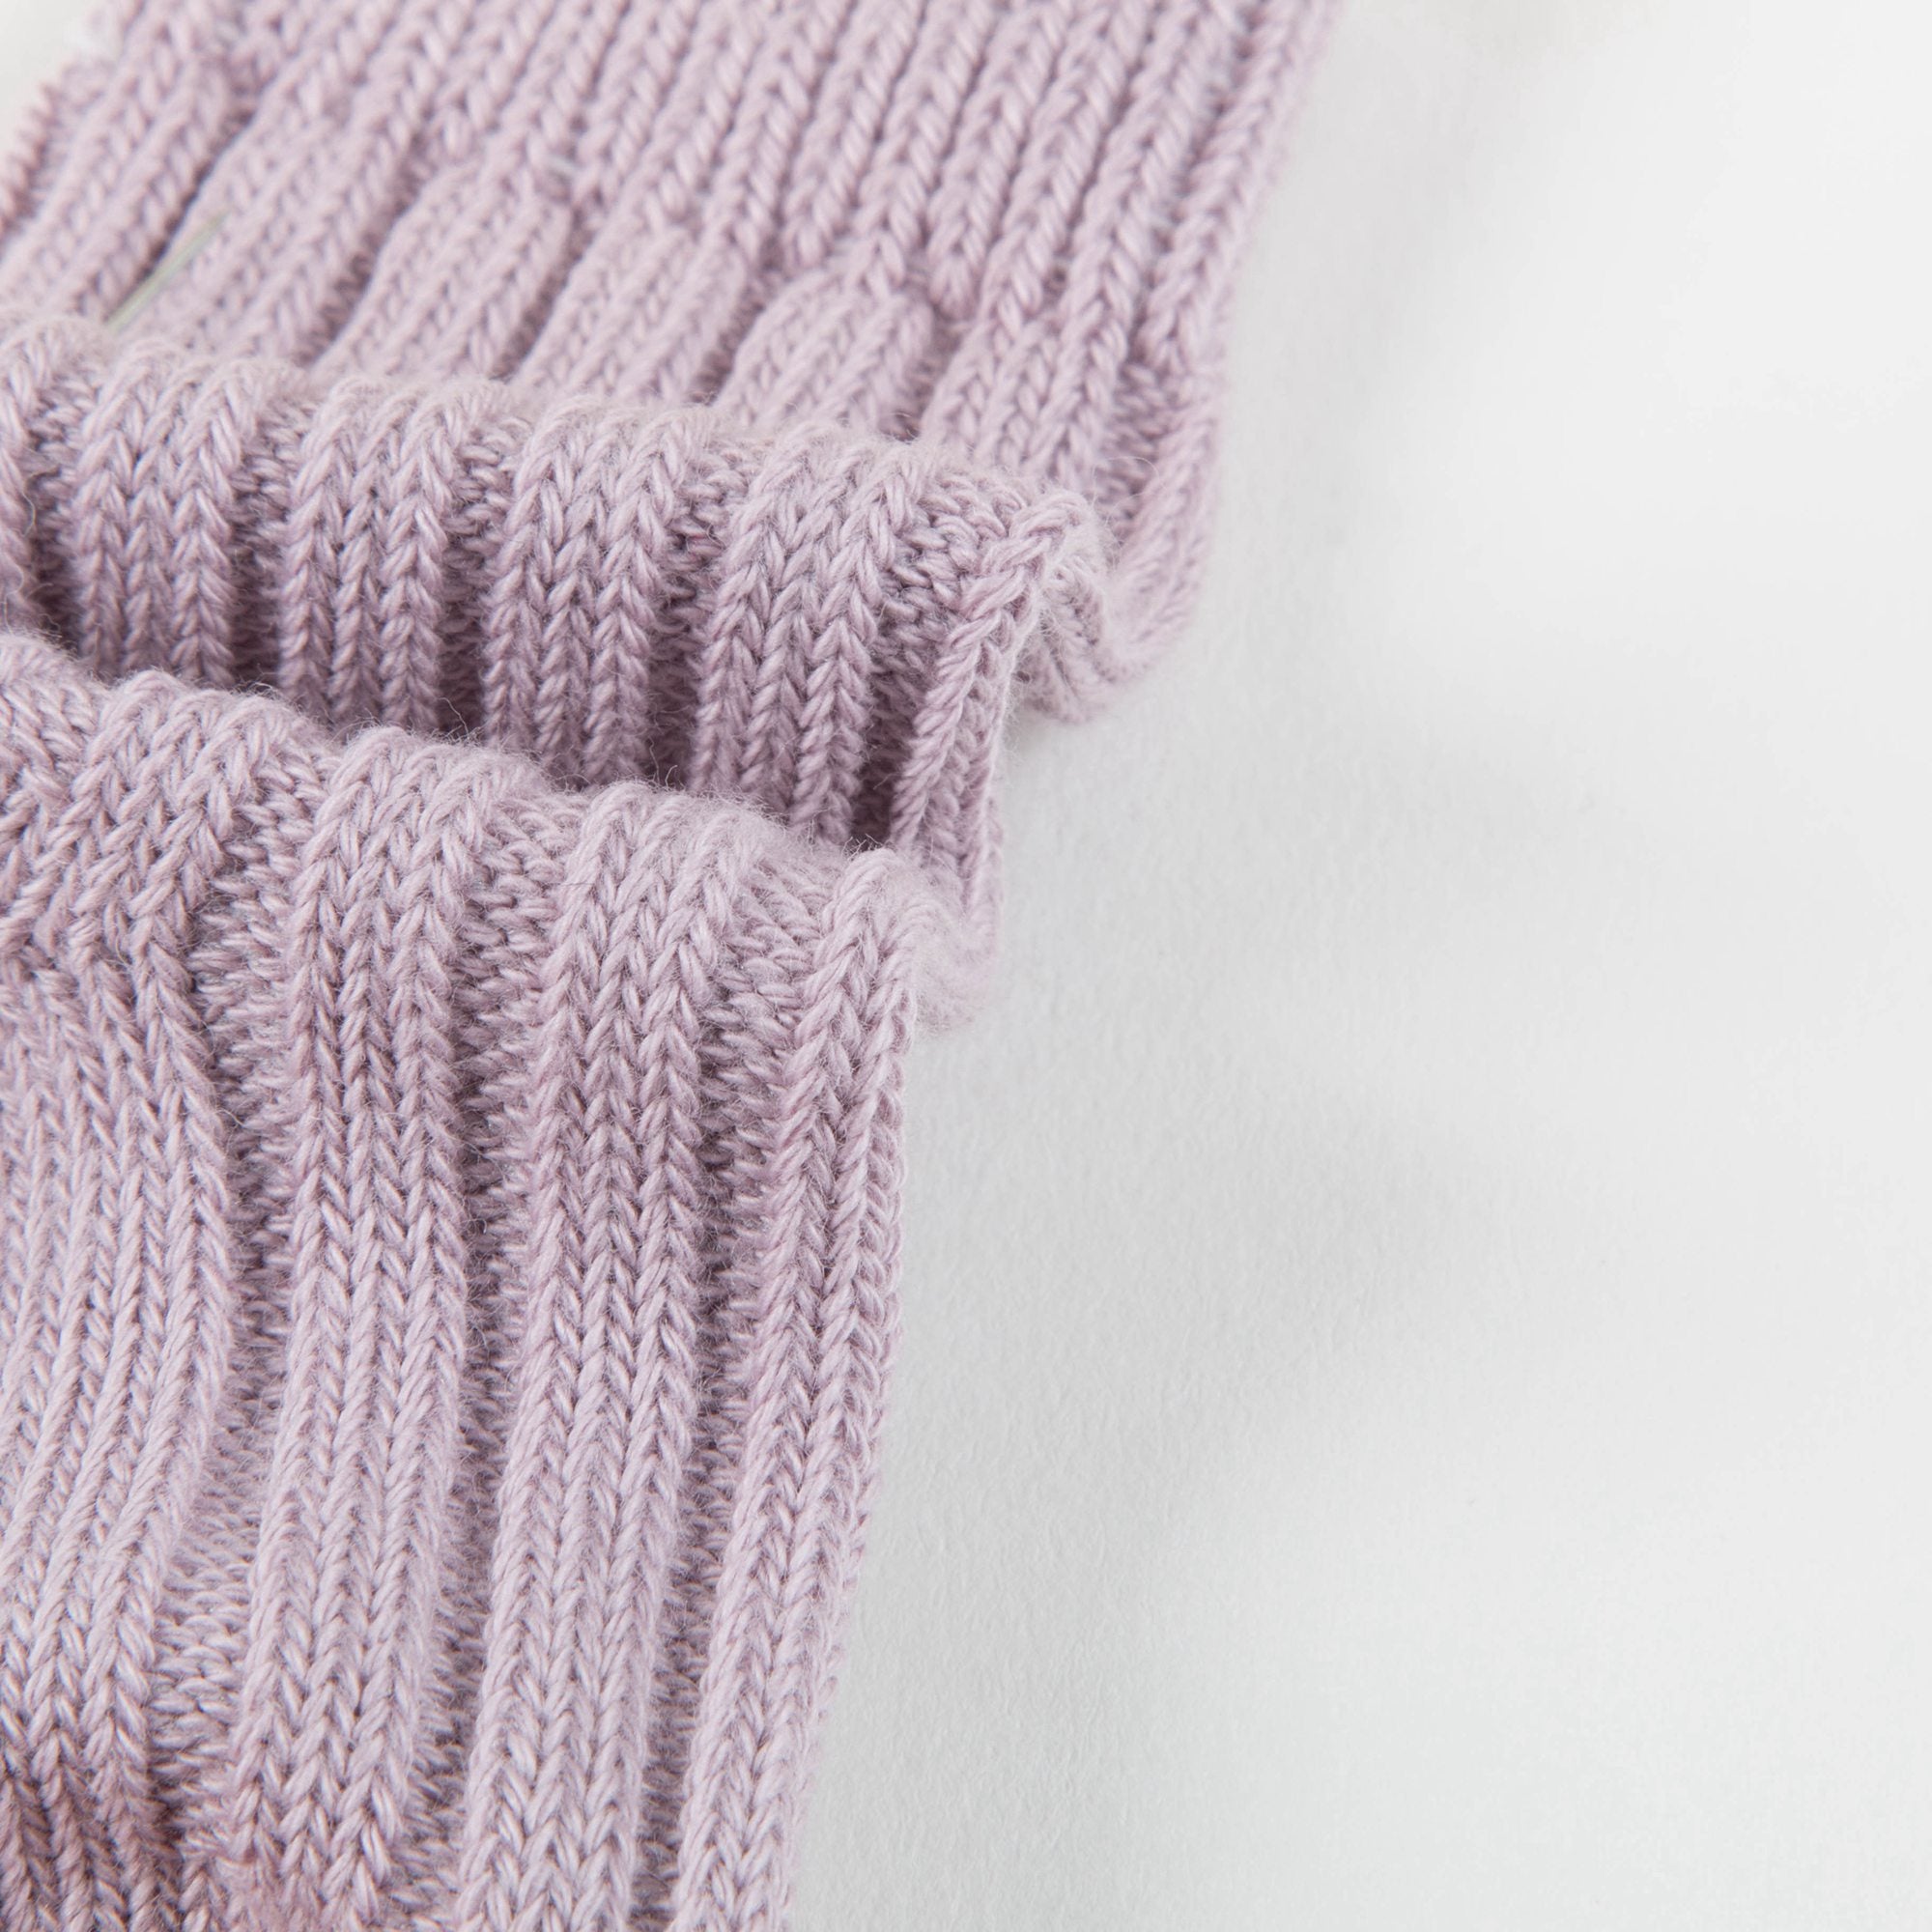 Baby Lavender Cotton Knitwear Socks